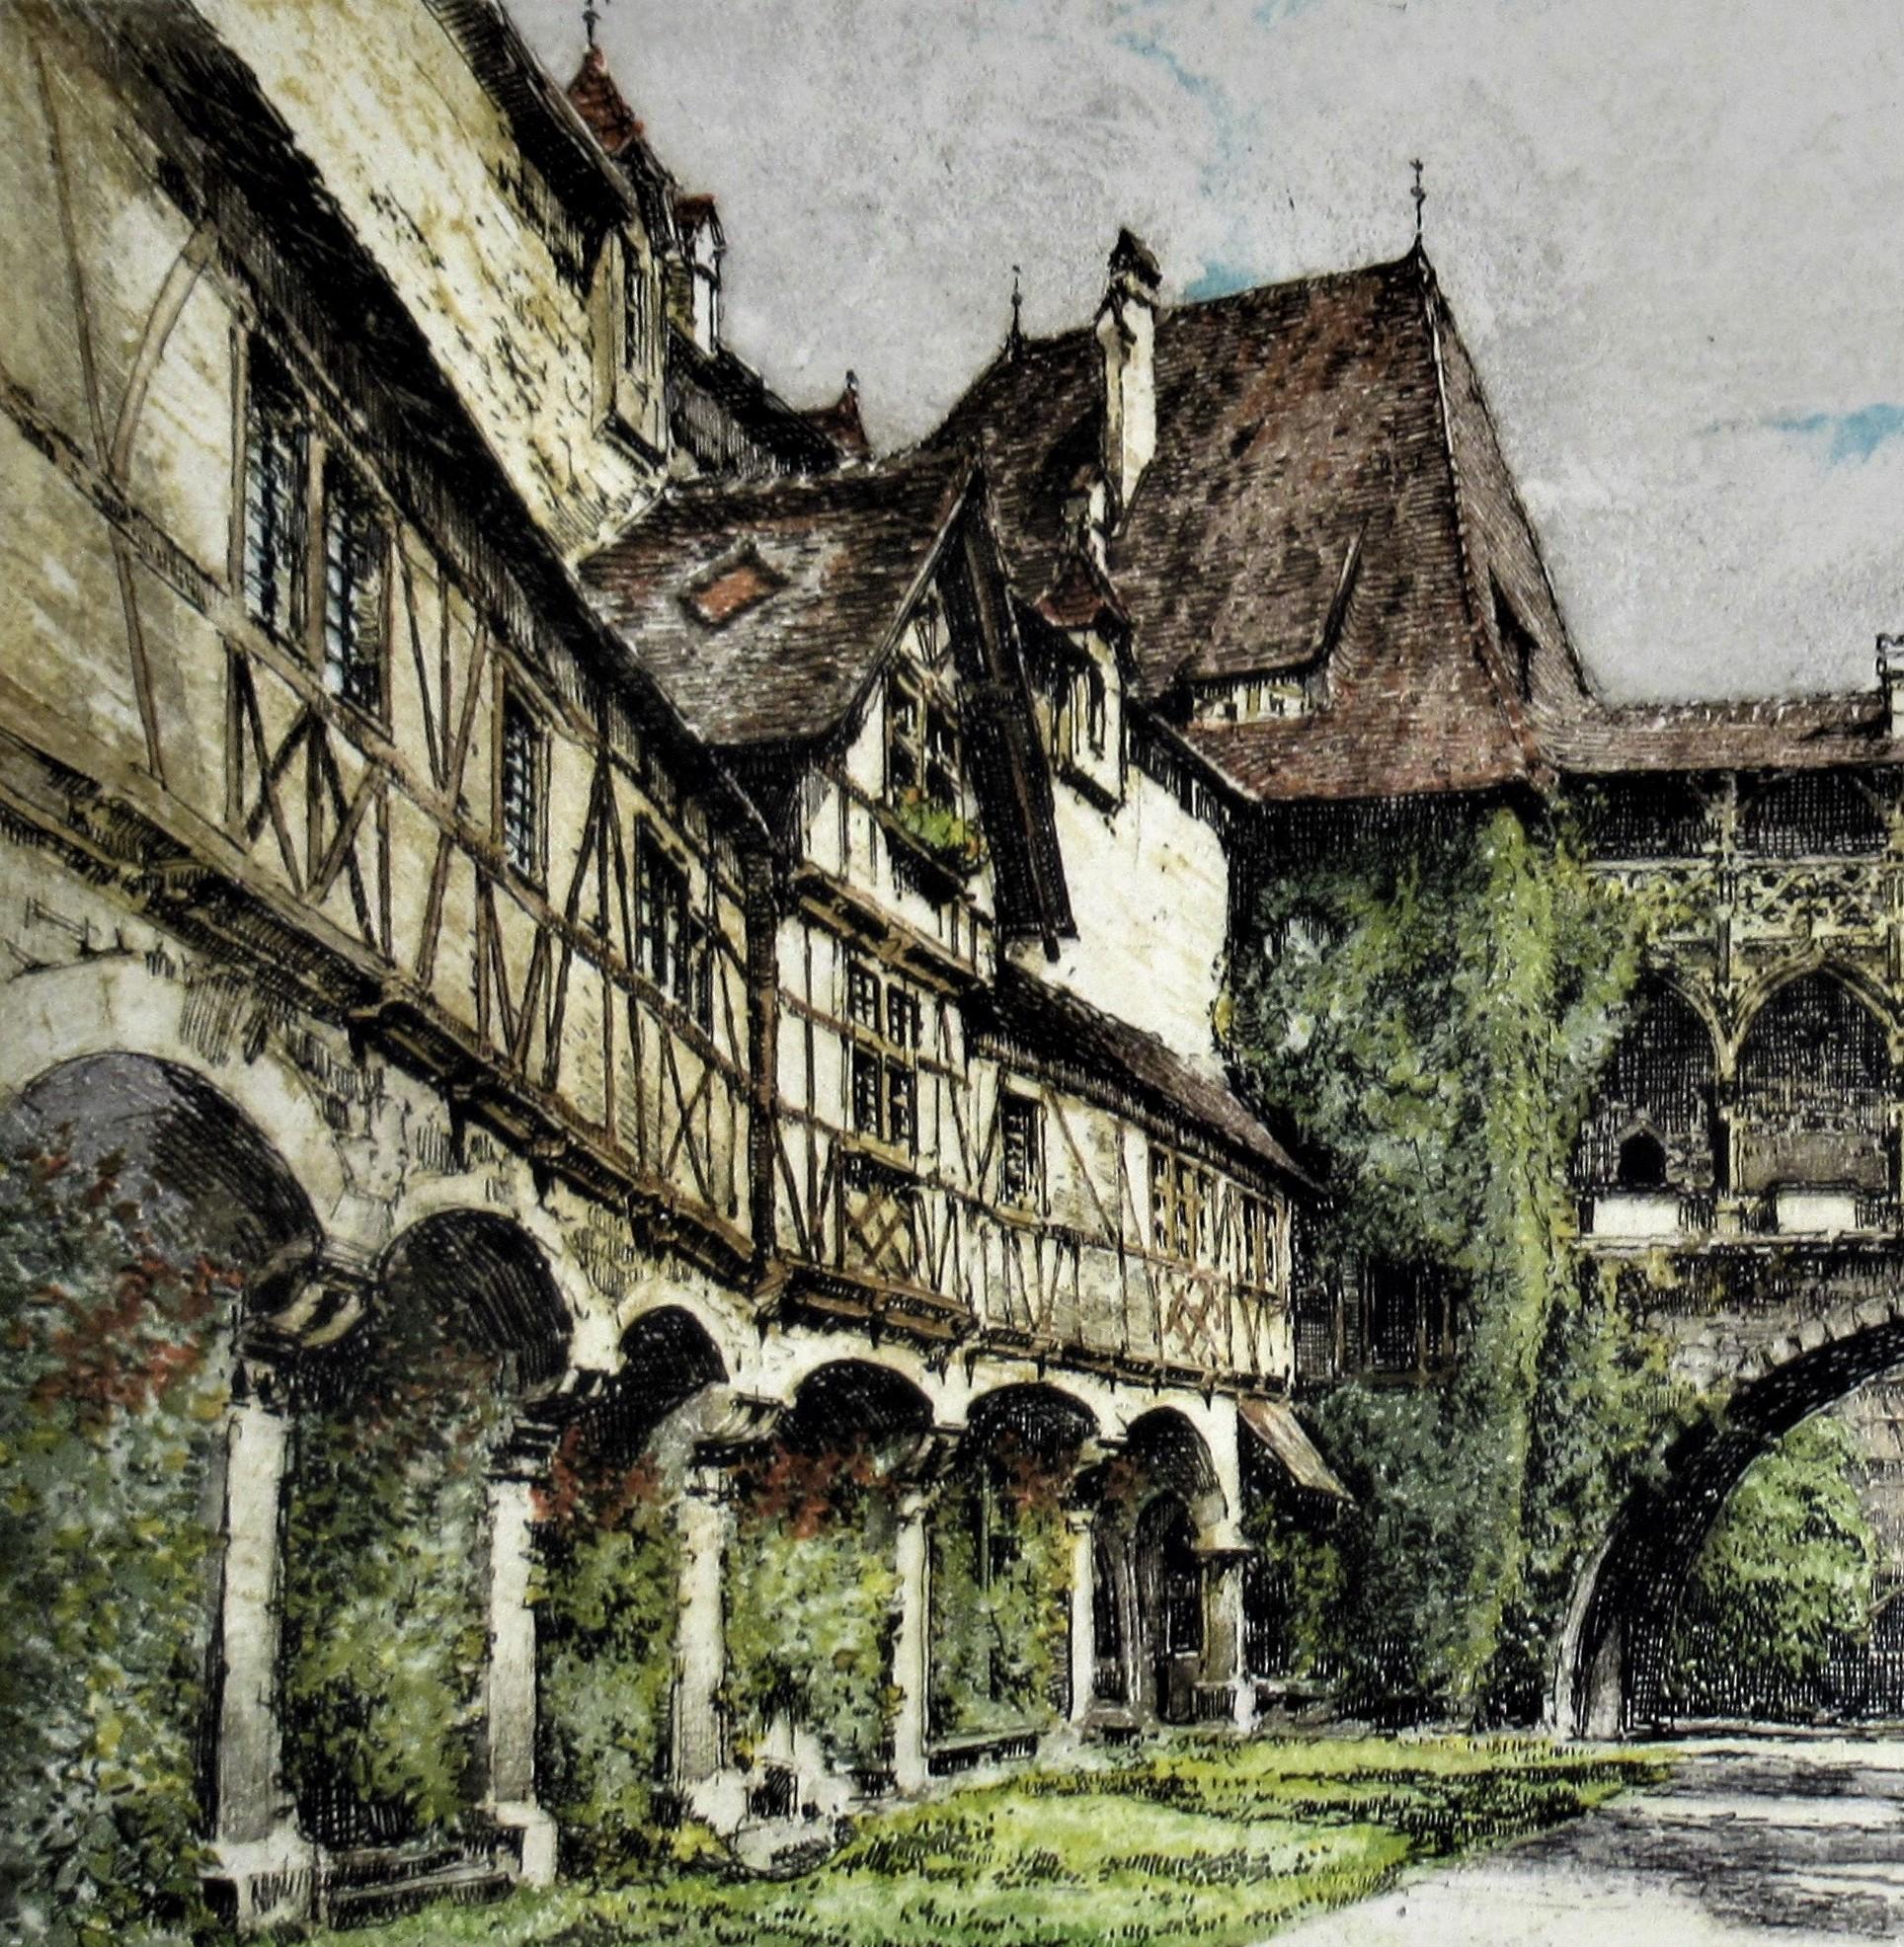 Kreuzenstein Courtyard, Austria - Realist Print by Robert Kasimir